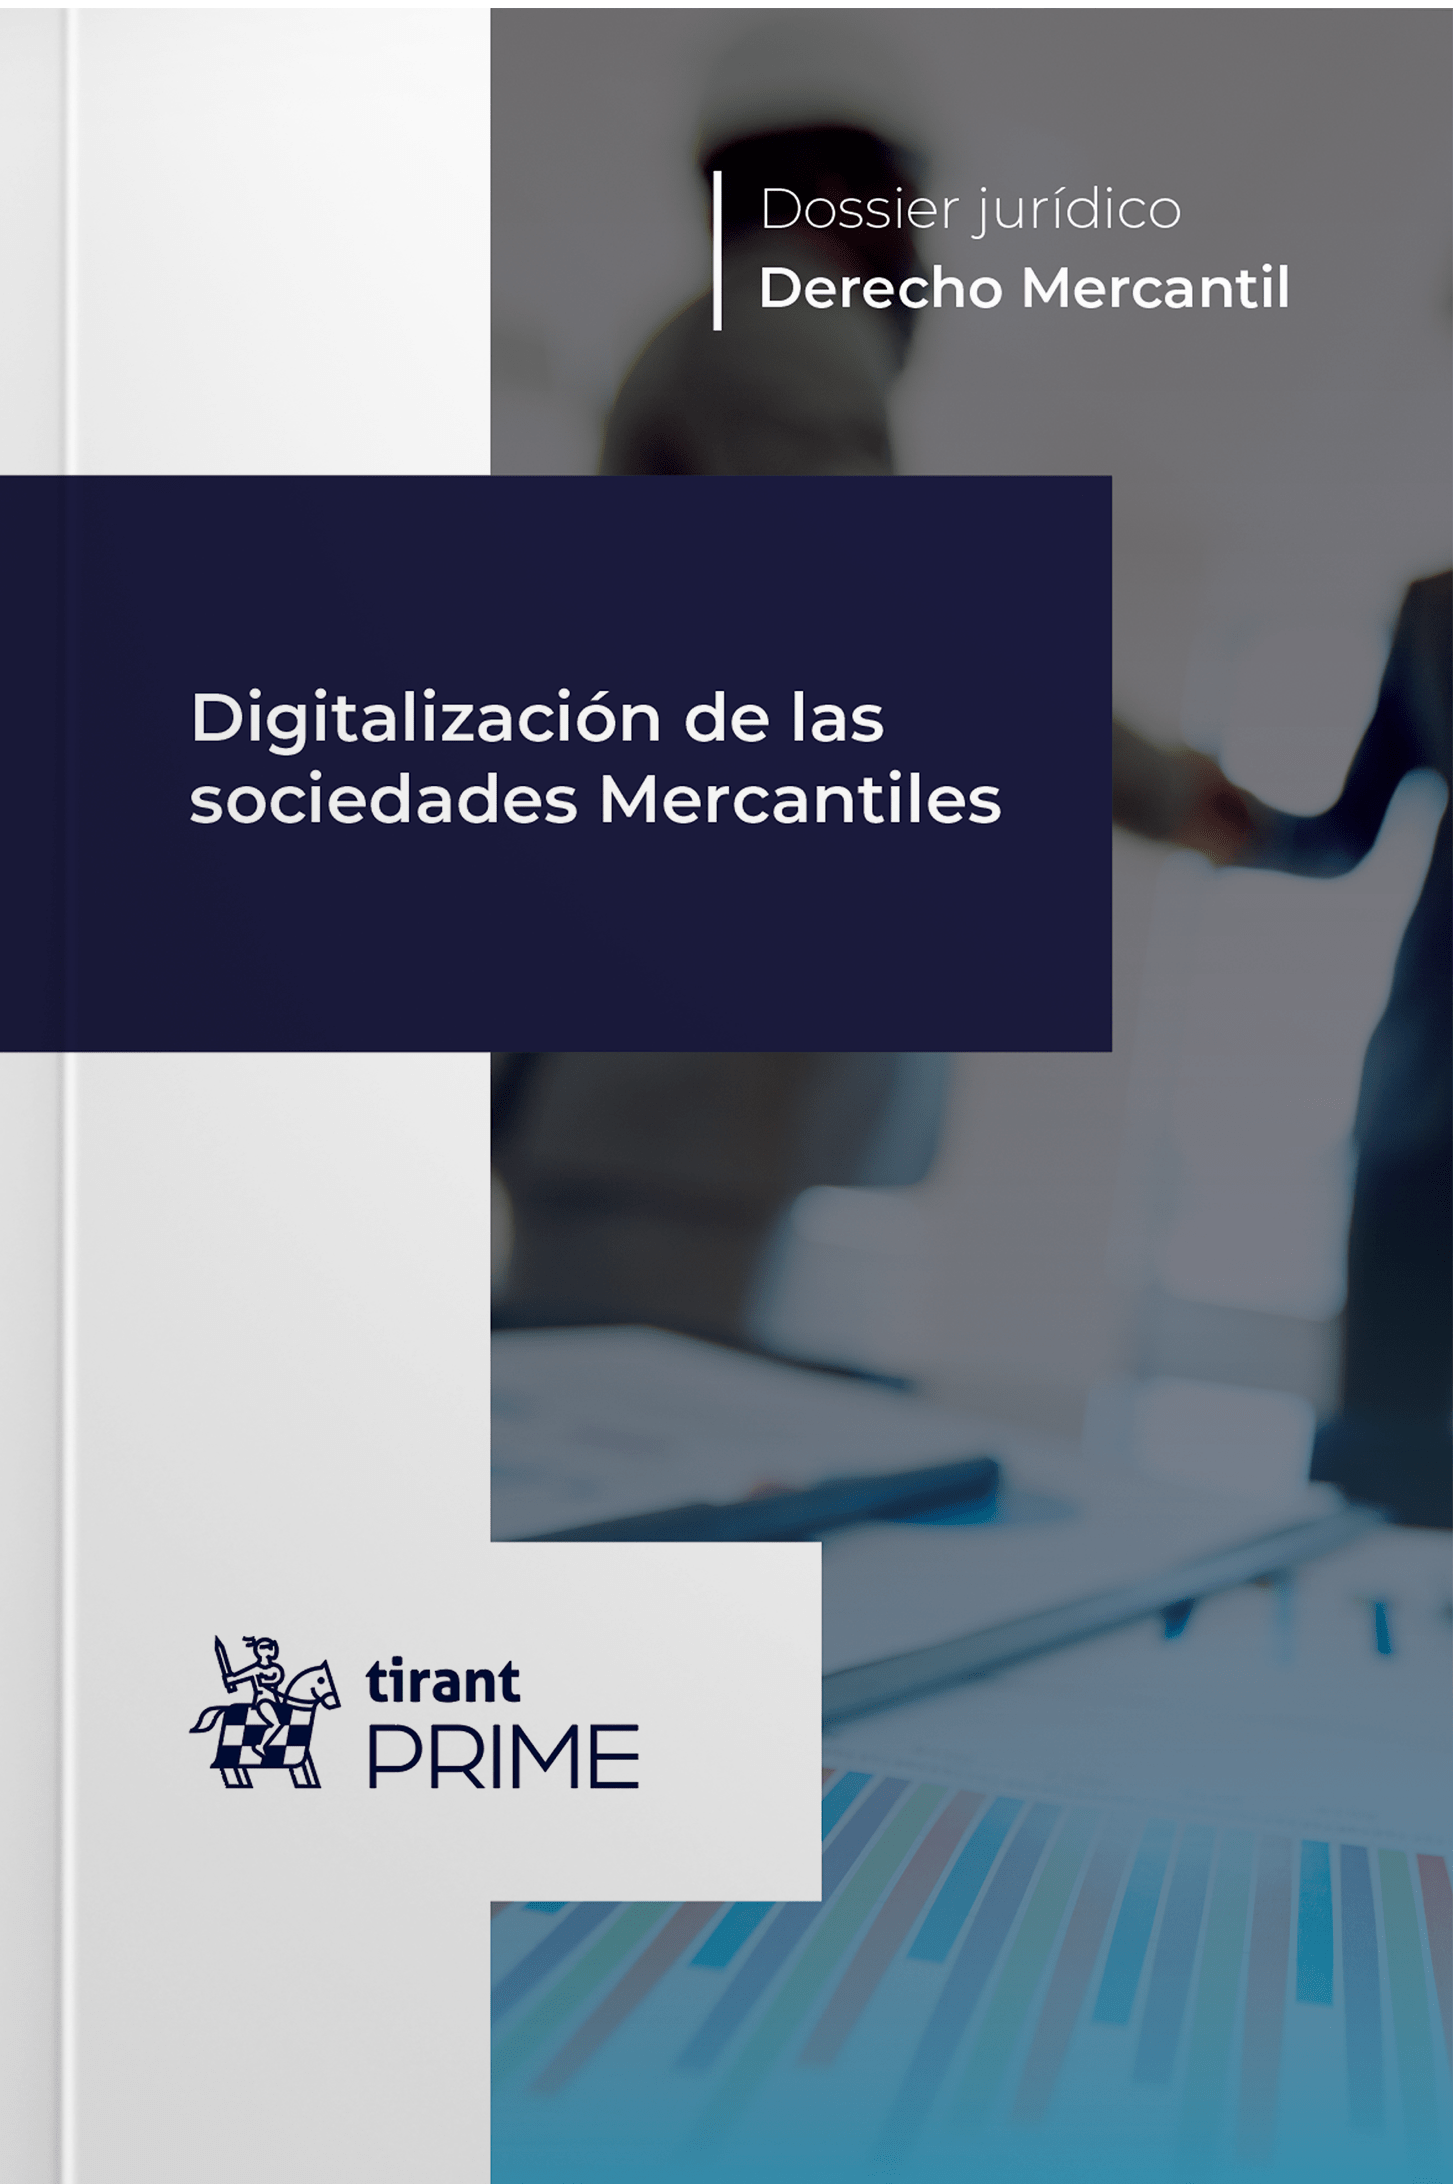 Dosier Digitalización de las Sociedades Mercantiles